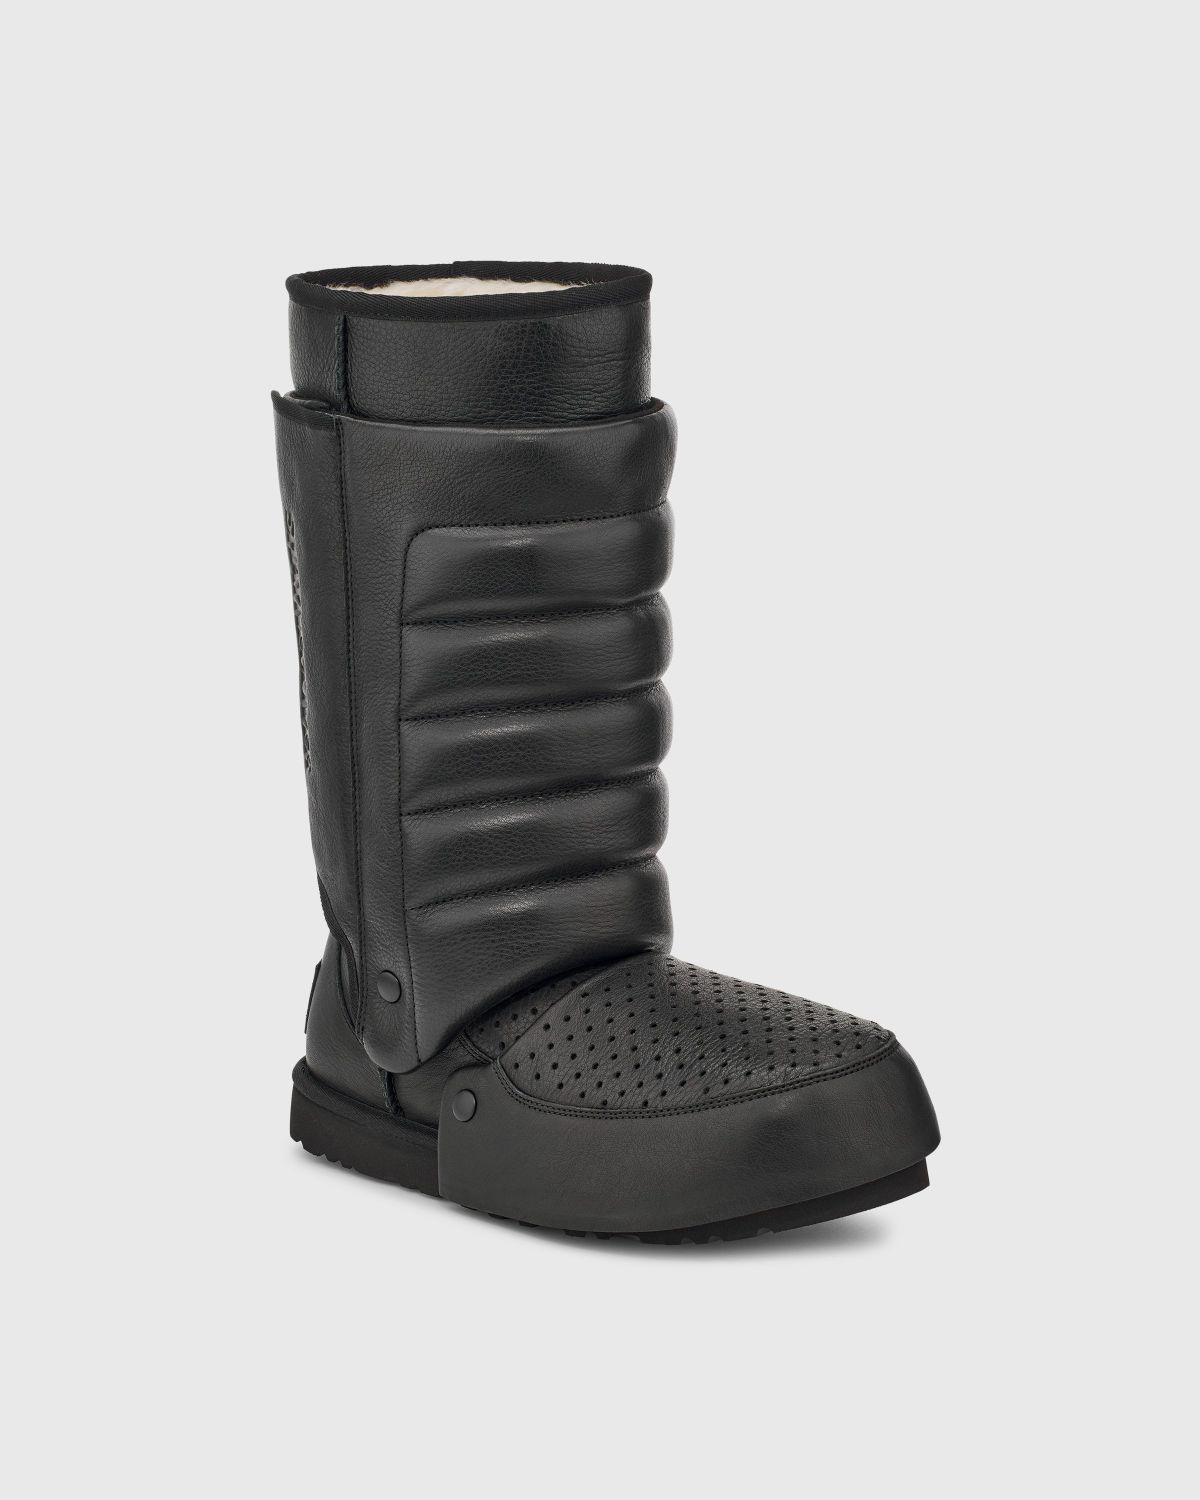 Ugg x Shayne Oliver – Tall Boot Black - Boots - Black - Image 3